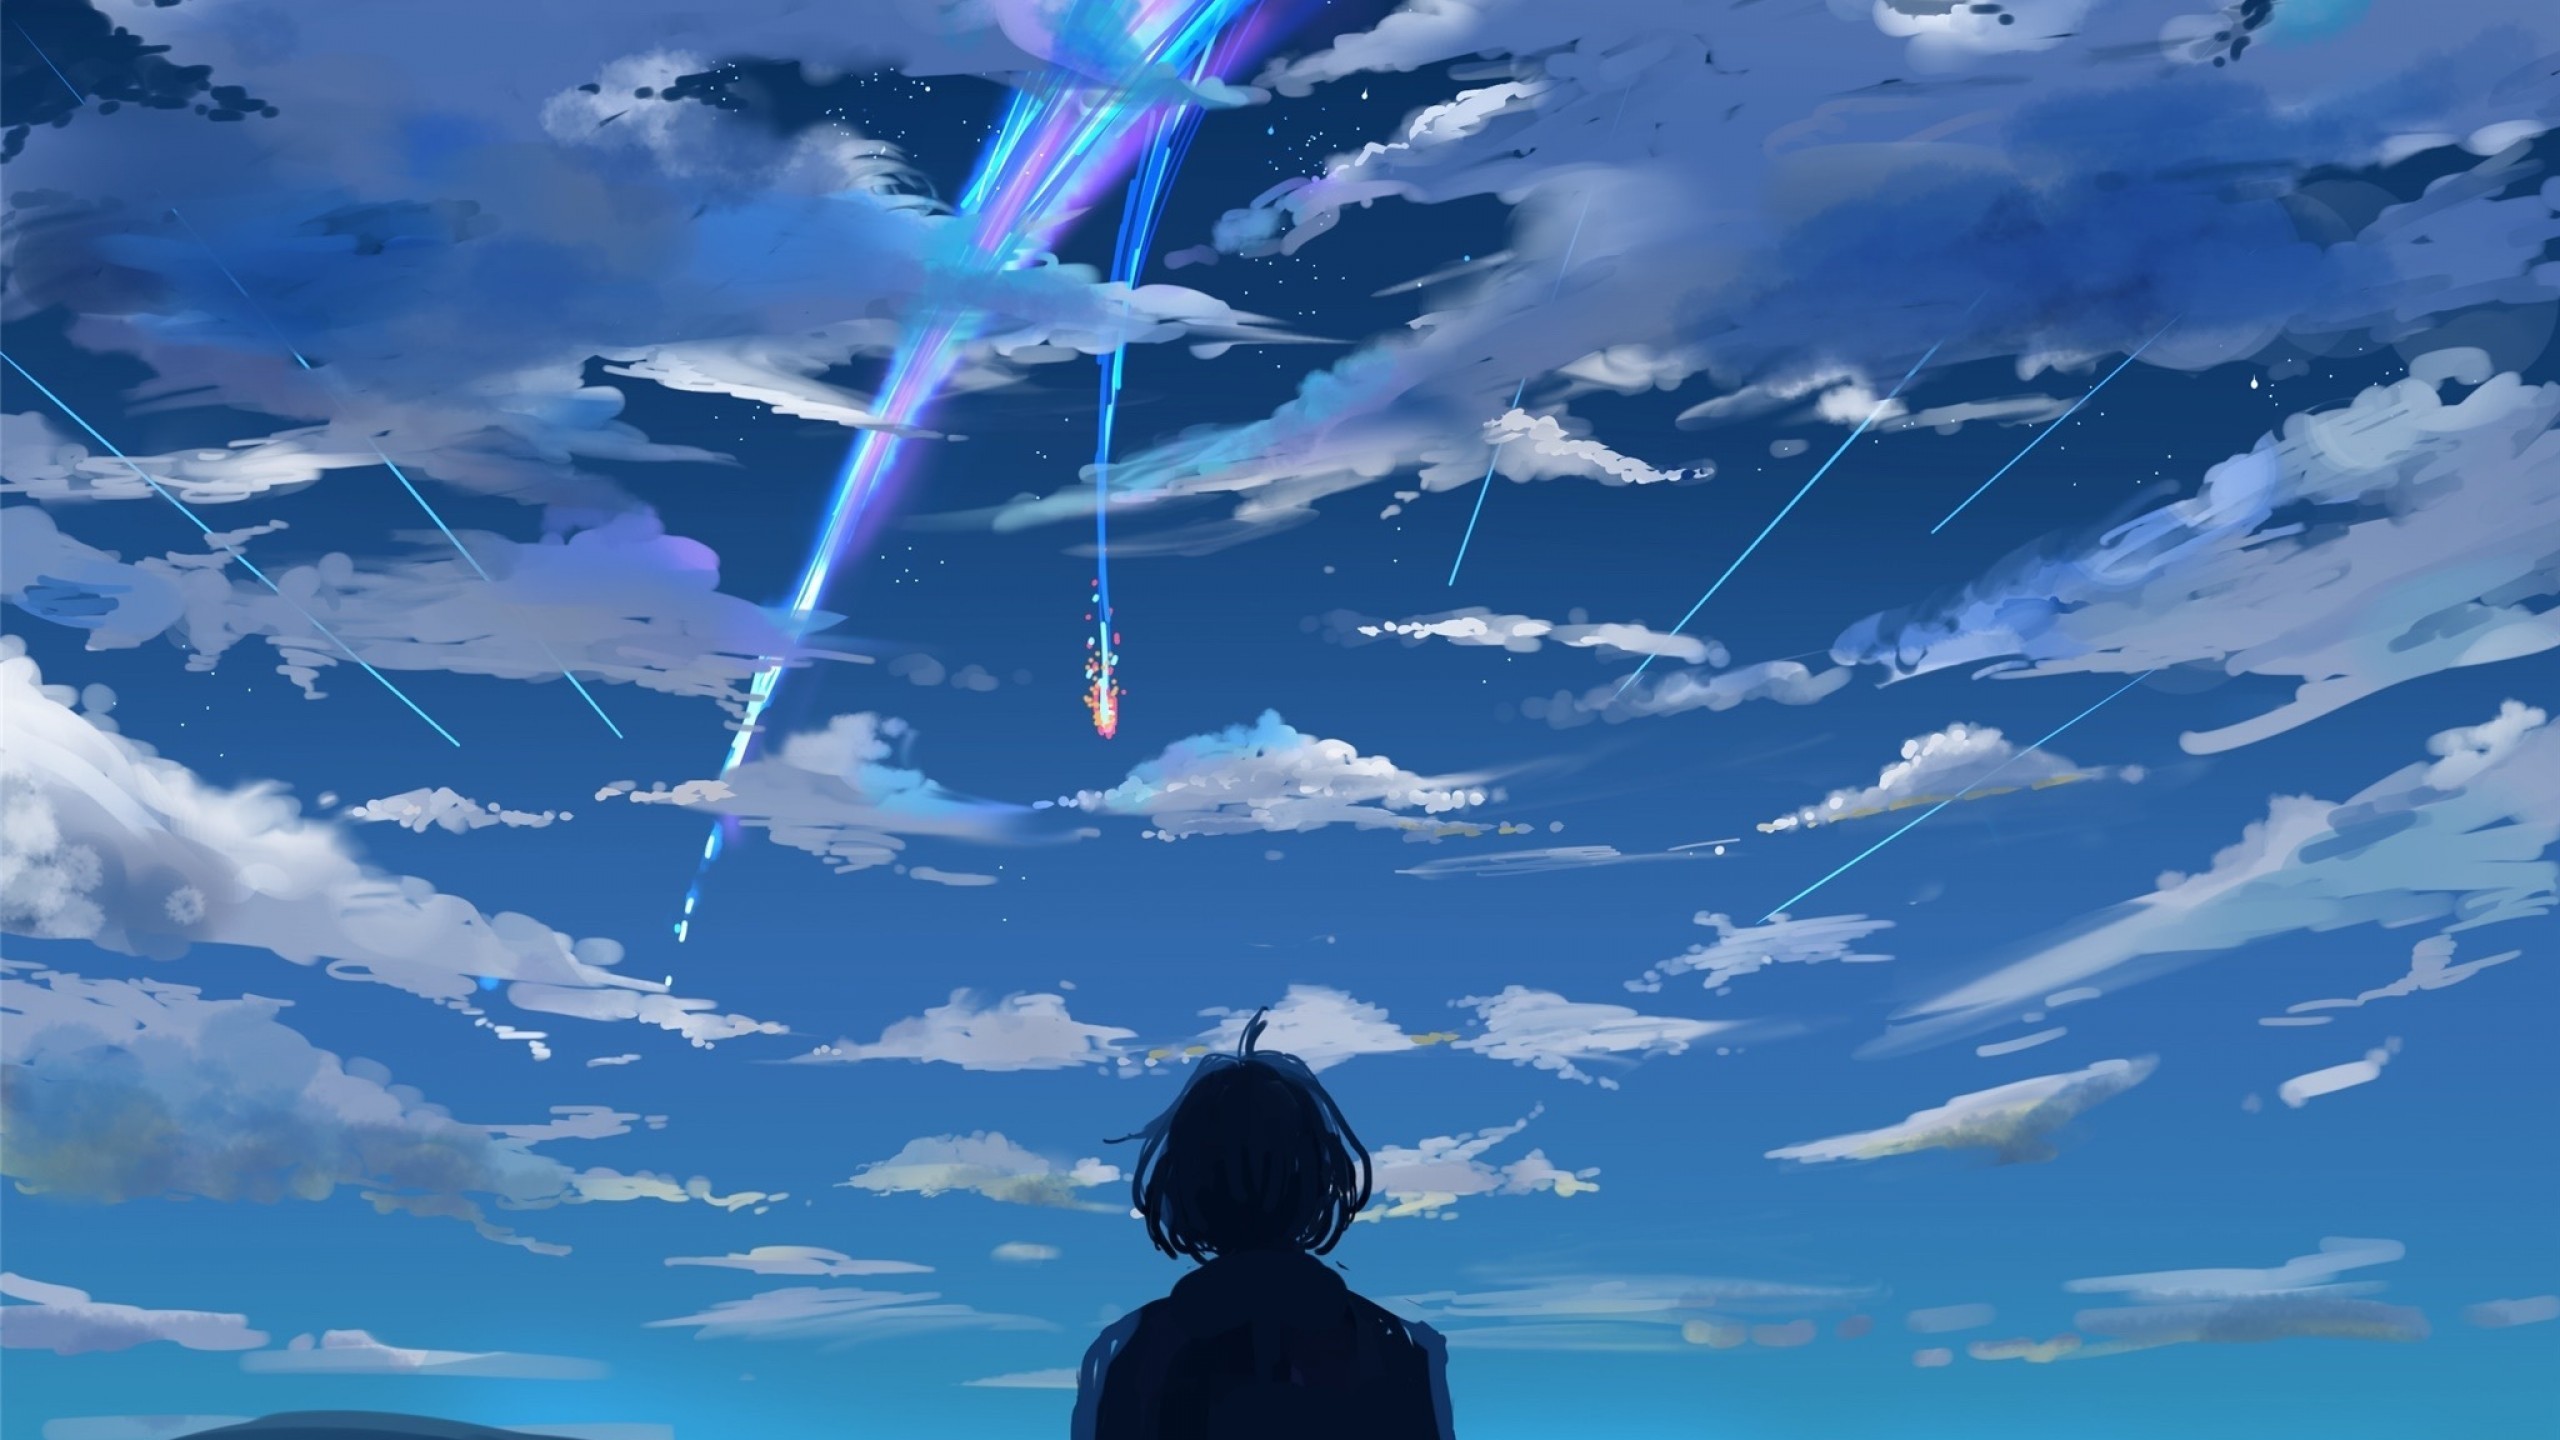 Anime Cloud wallpaper download